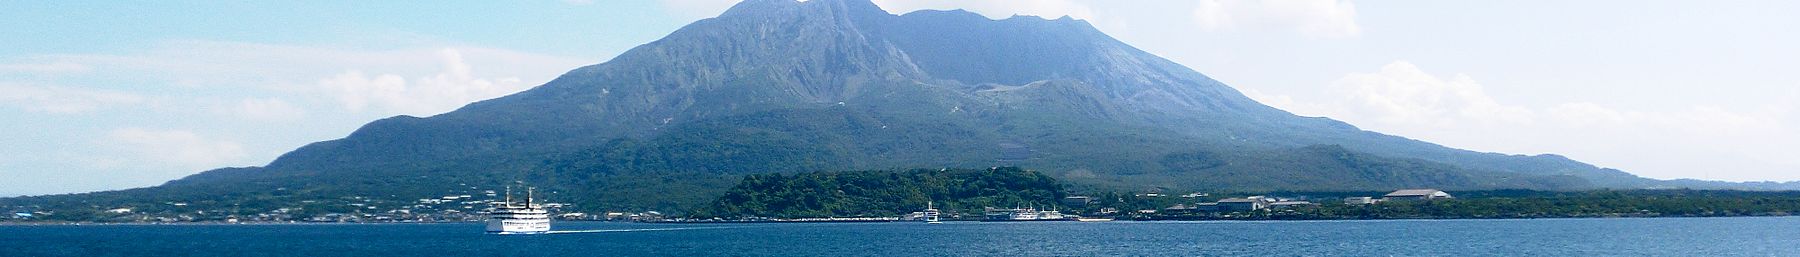 Sakurajima banner.jpg